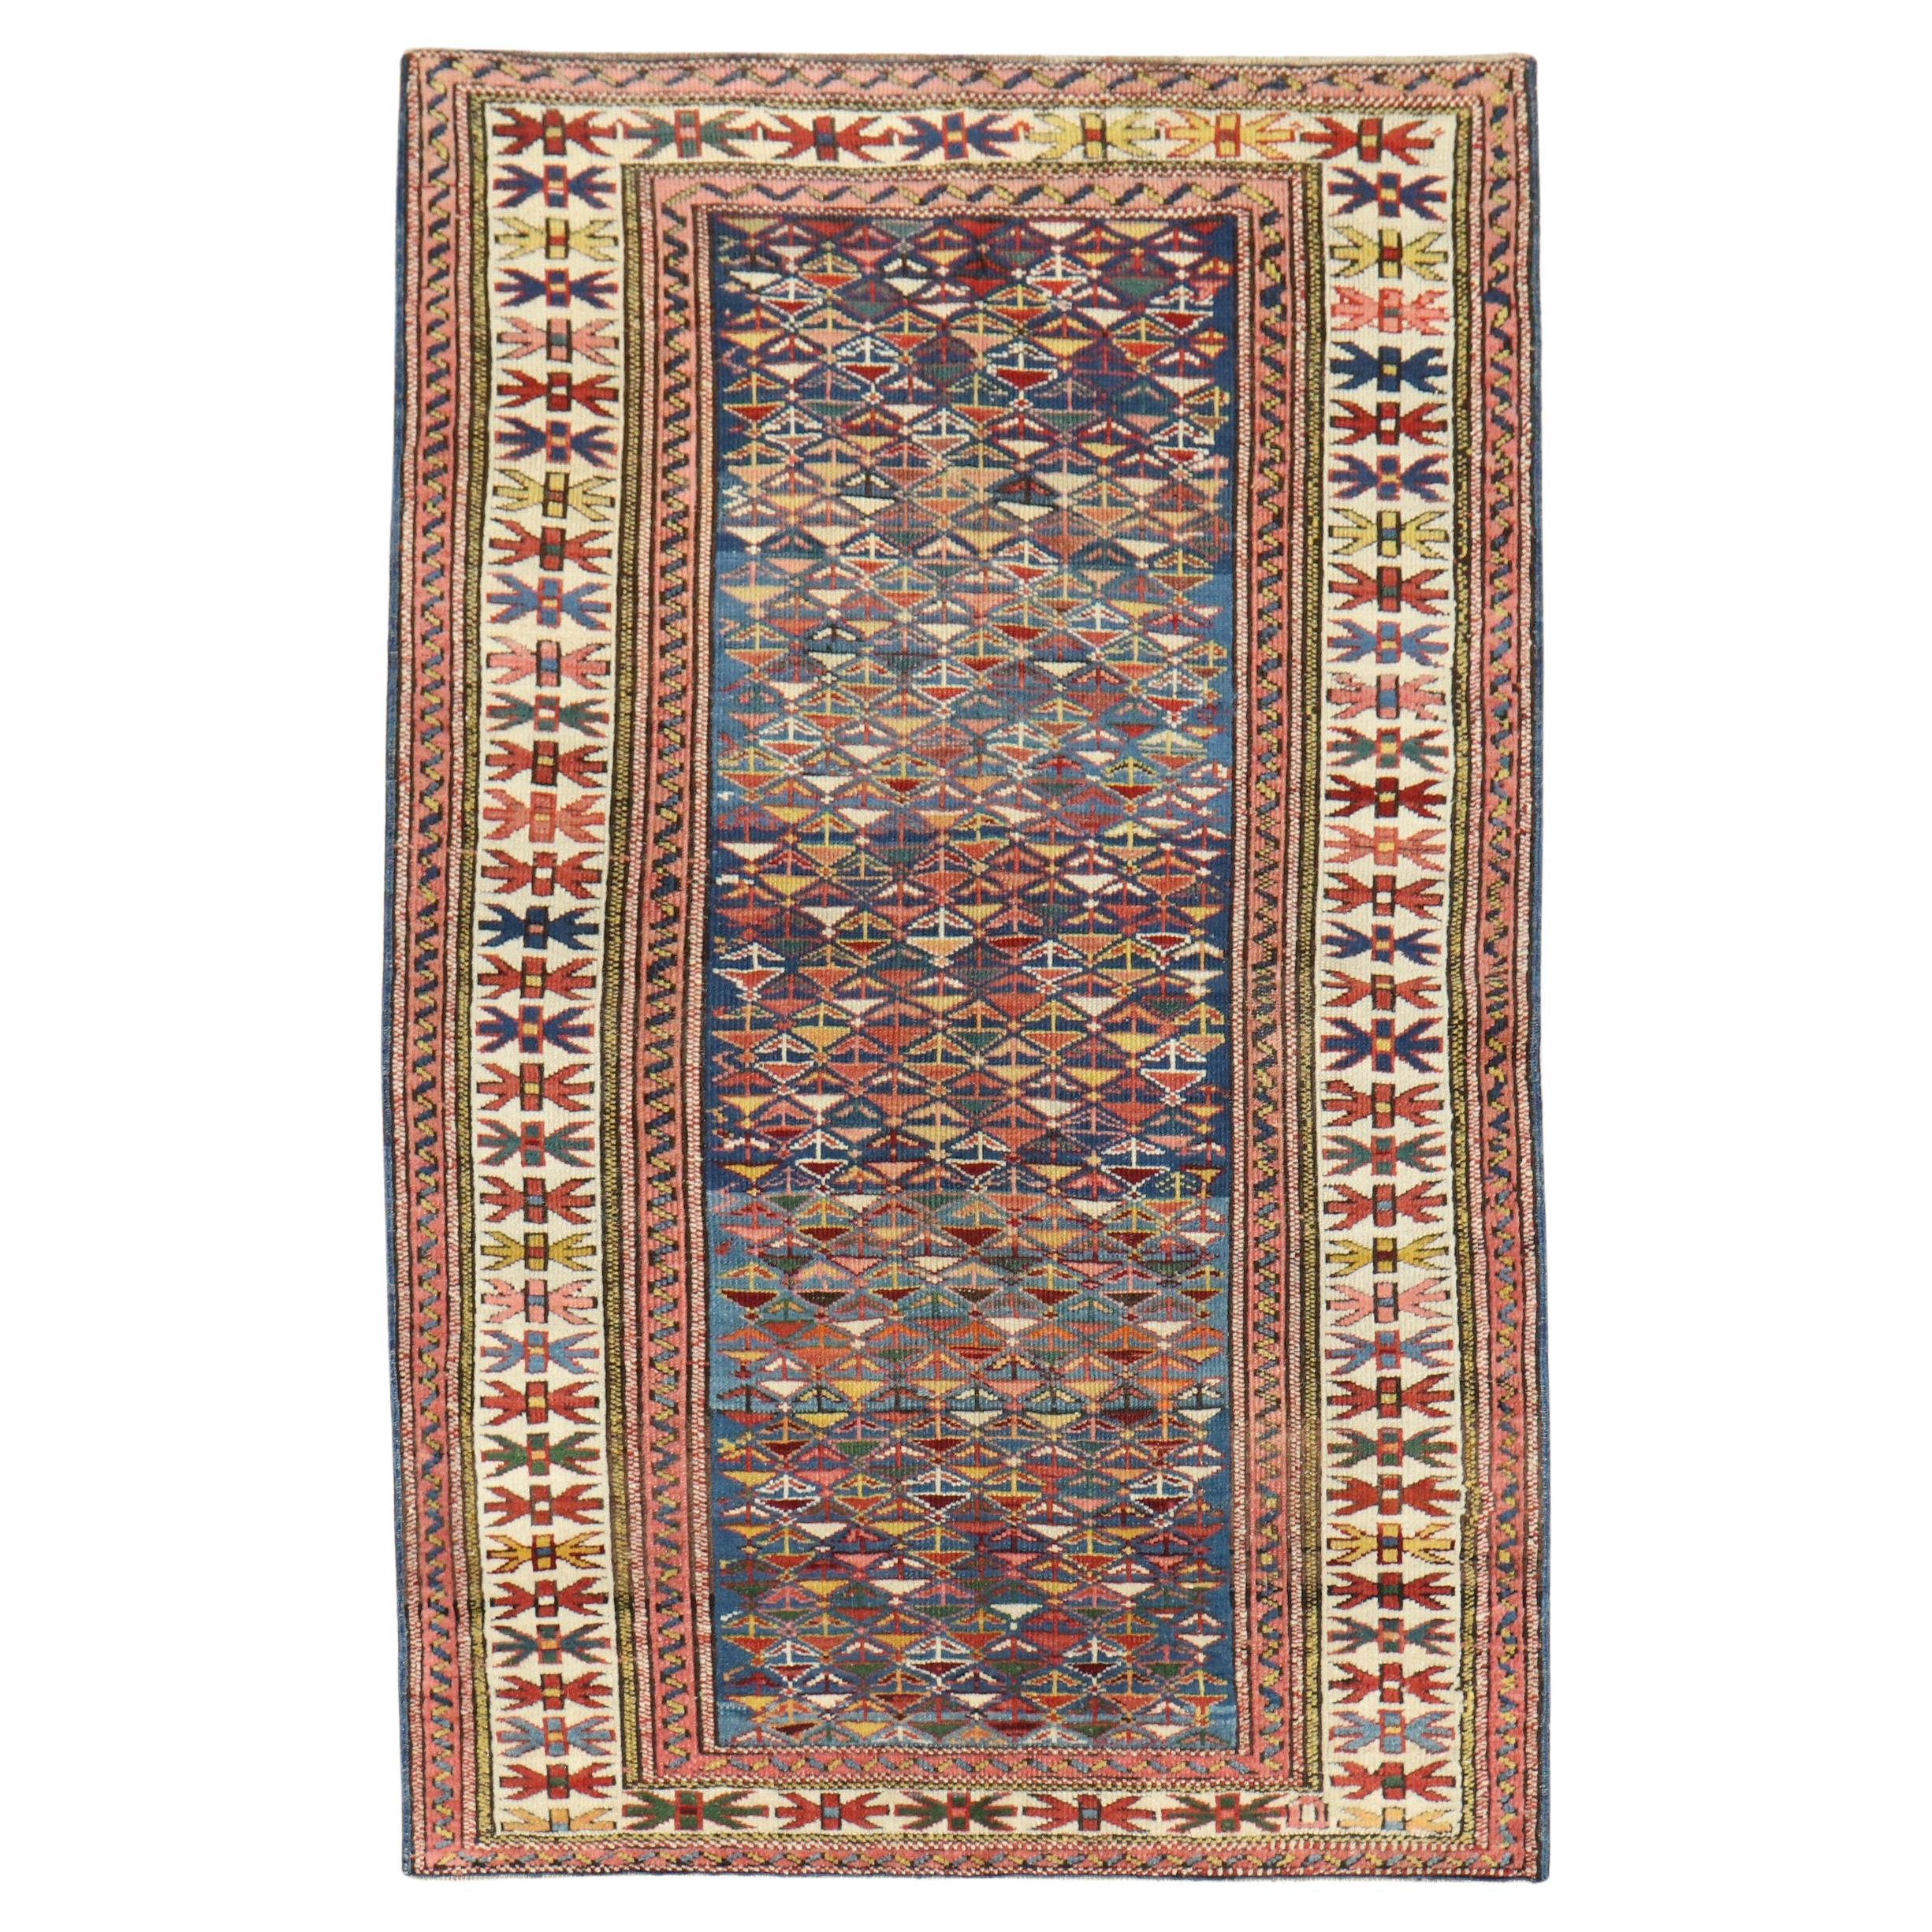 Antiker kaukasischer Kuba-Teppich der Zabihi-Kollektion des 19. Jahrhunderts